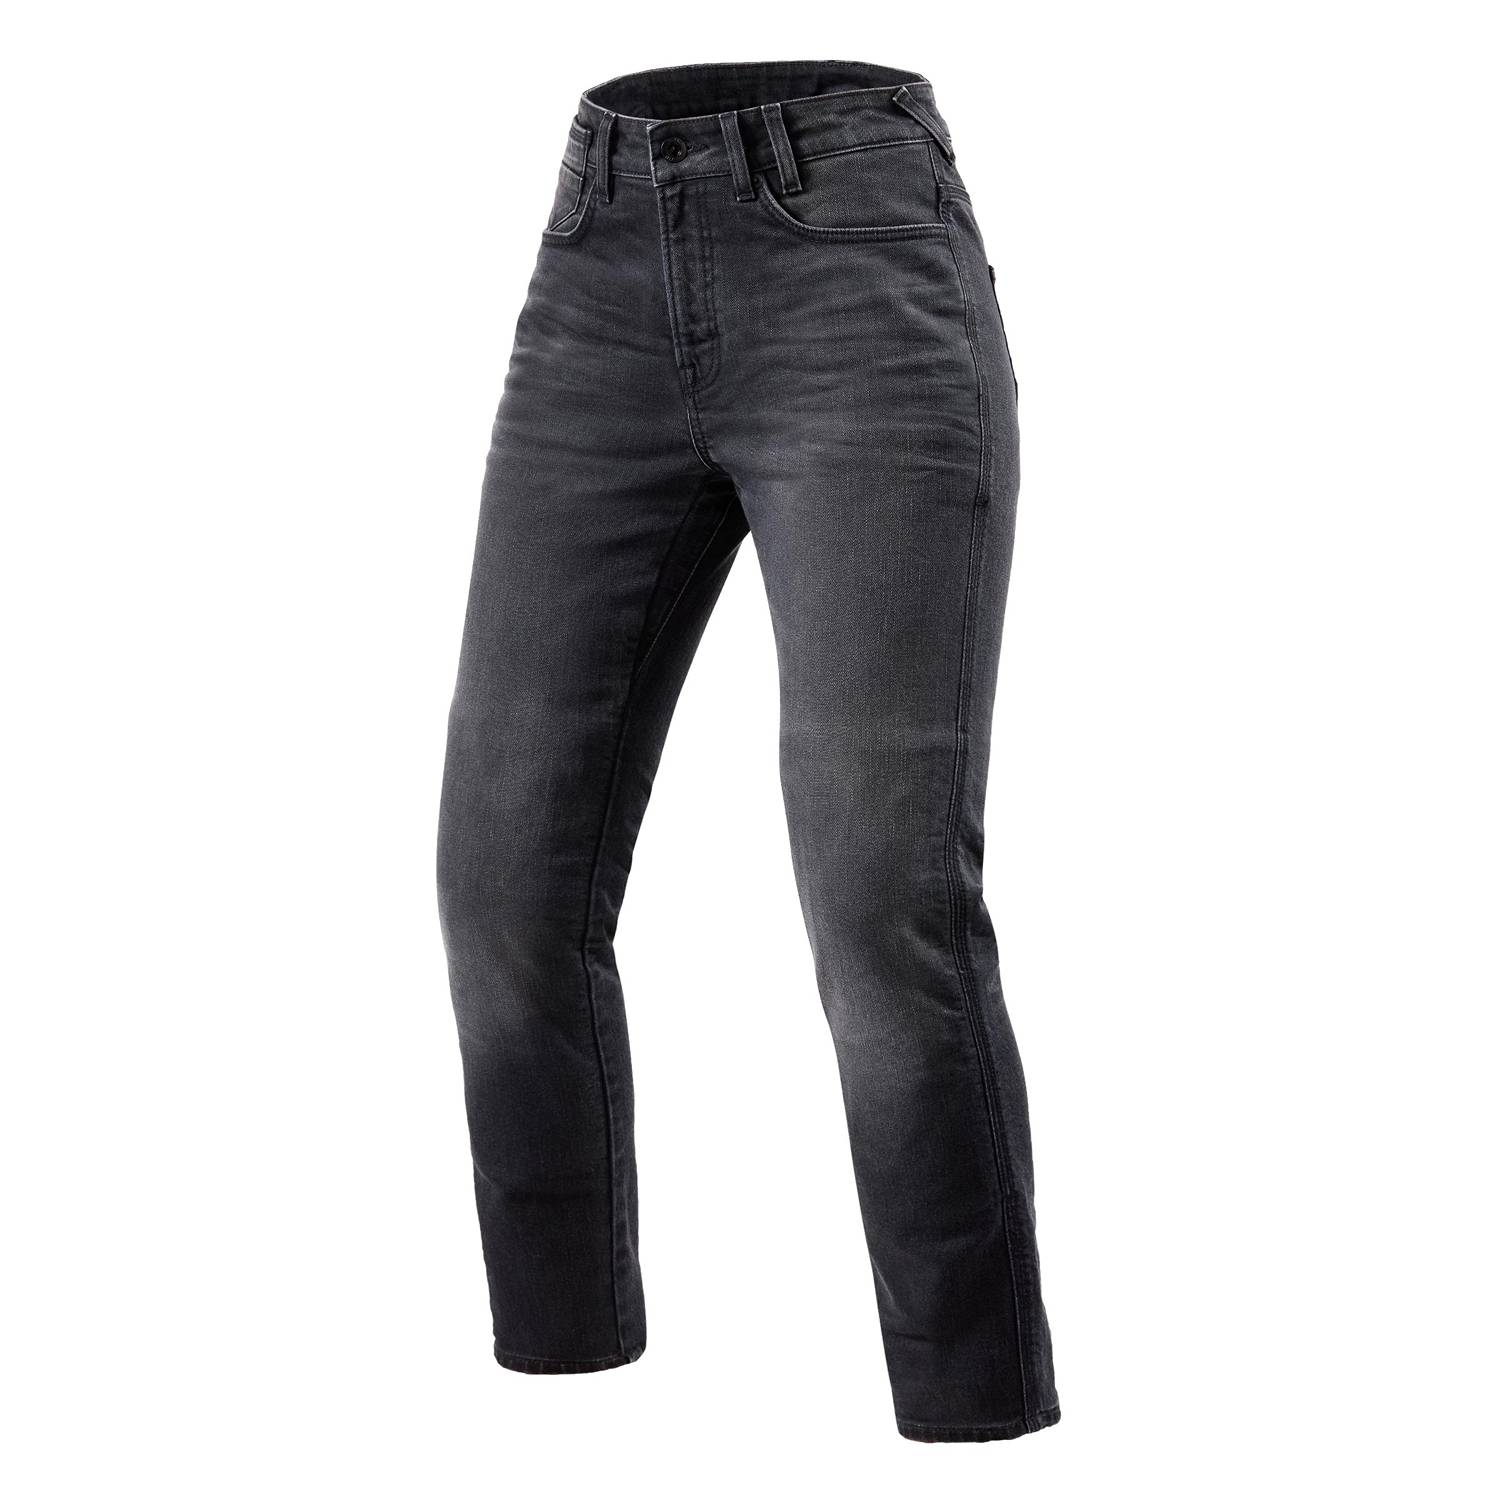 Image of REV'IT! Jeans Victoria 2 Ladies SF Mid Grey Used Motorcycle Jeans Size L32/W29 EN